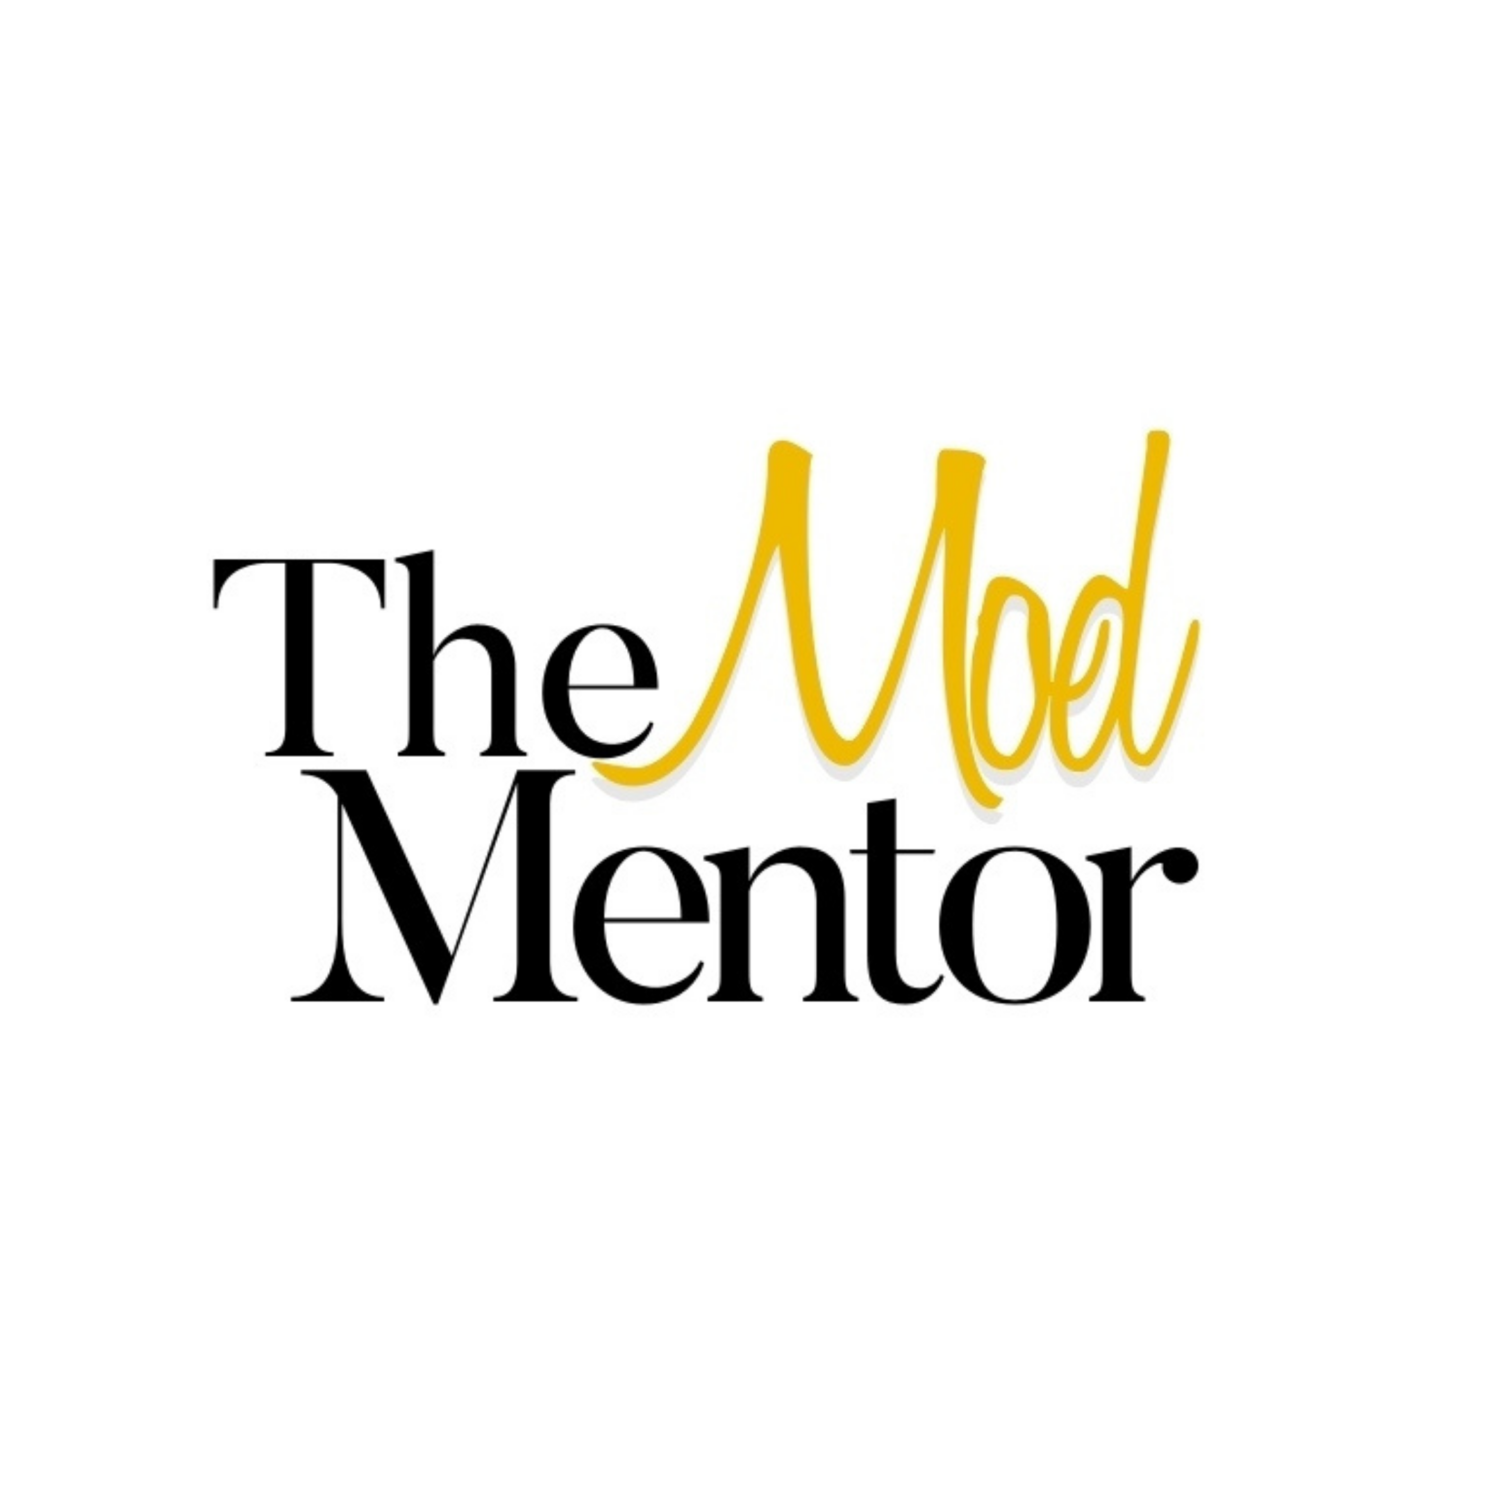 The Mod Mentor